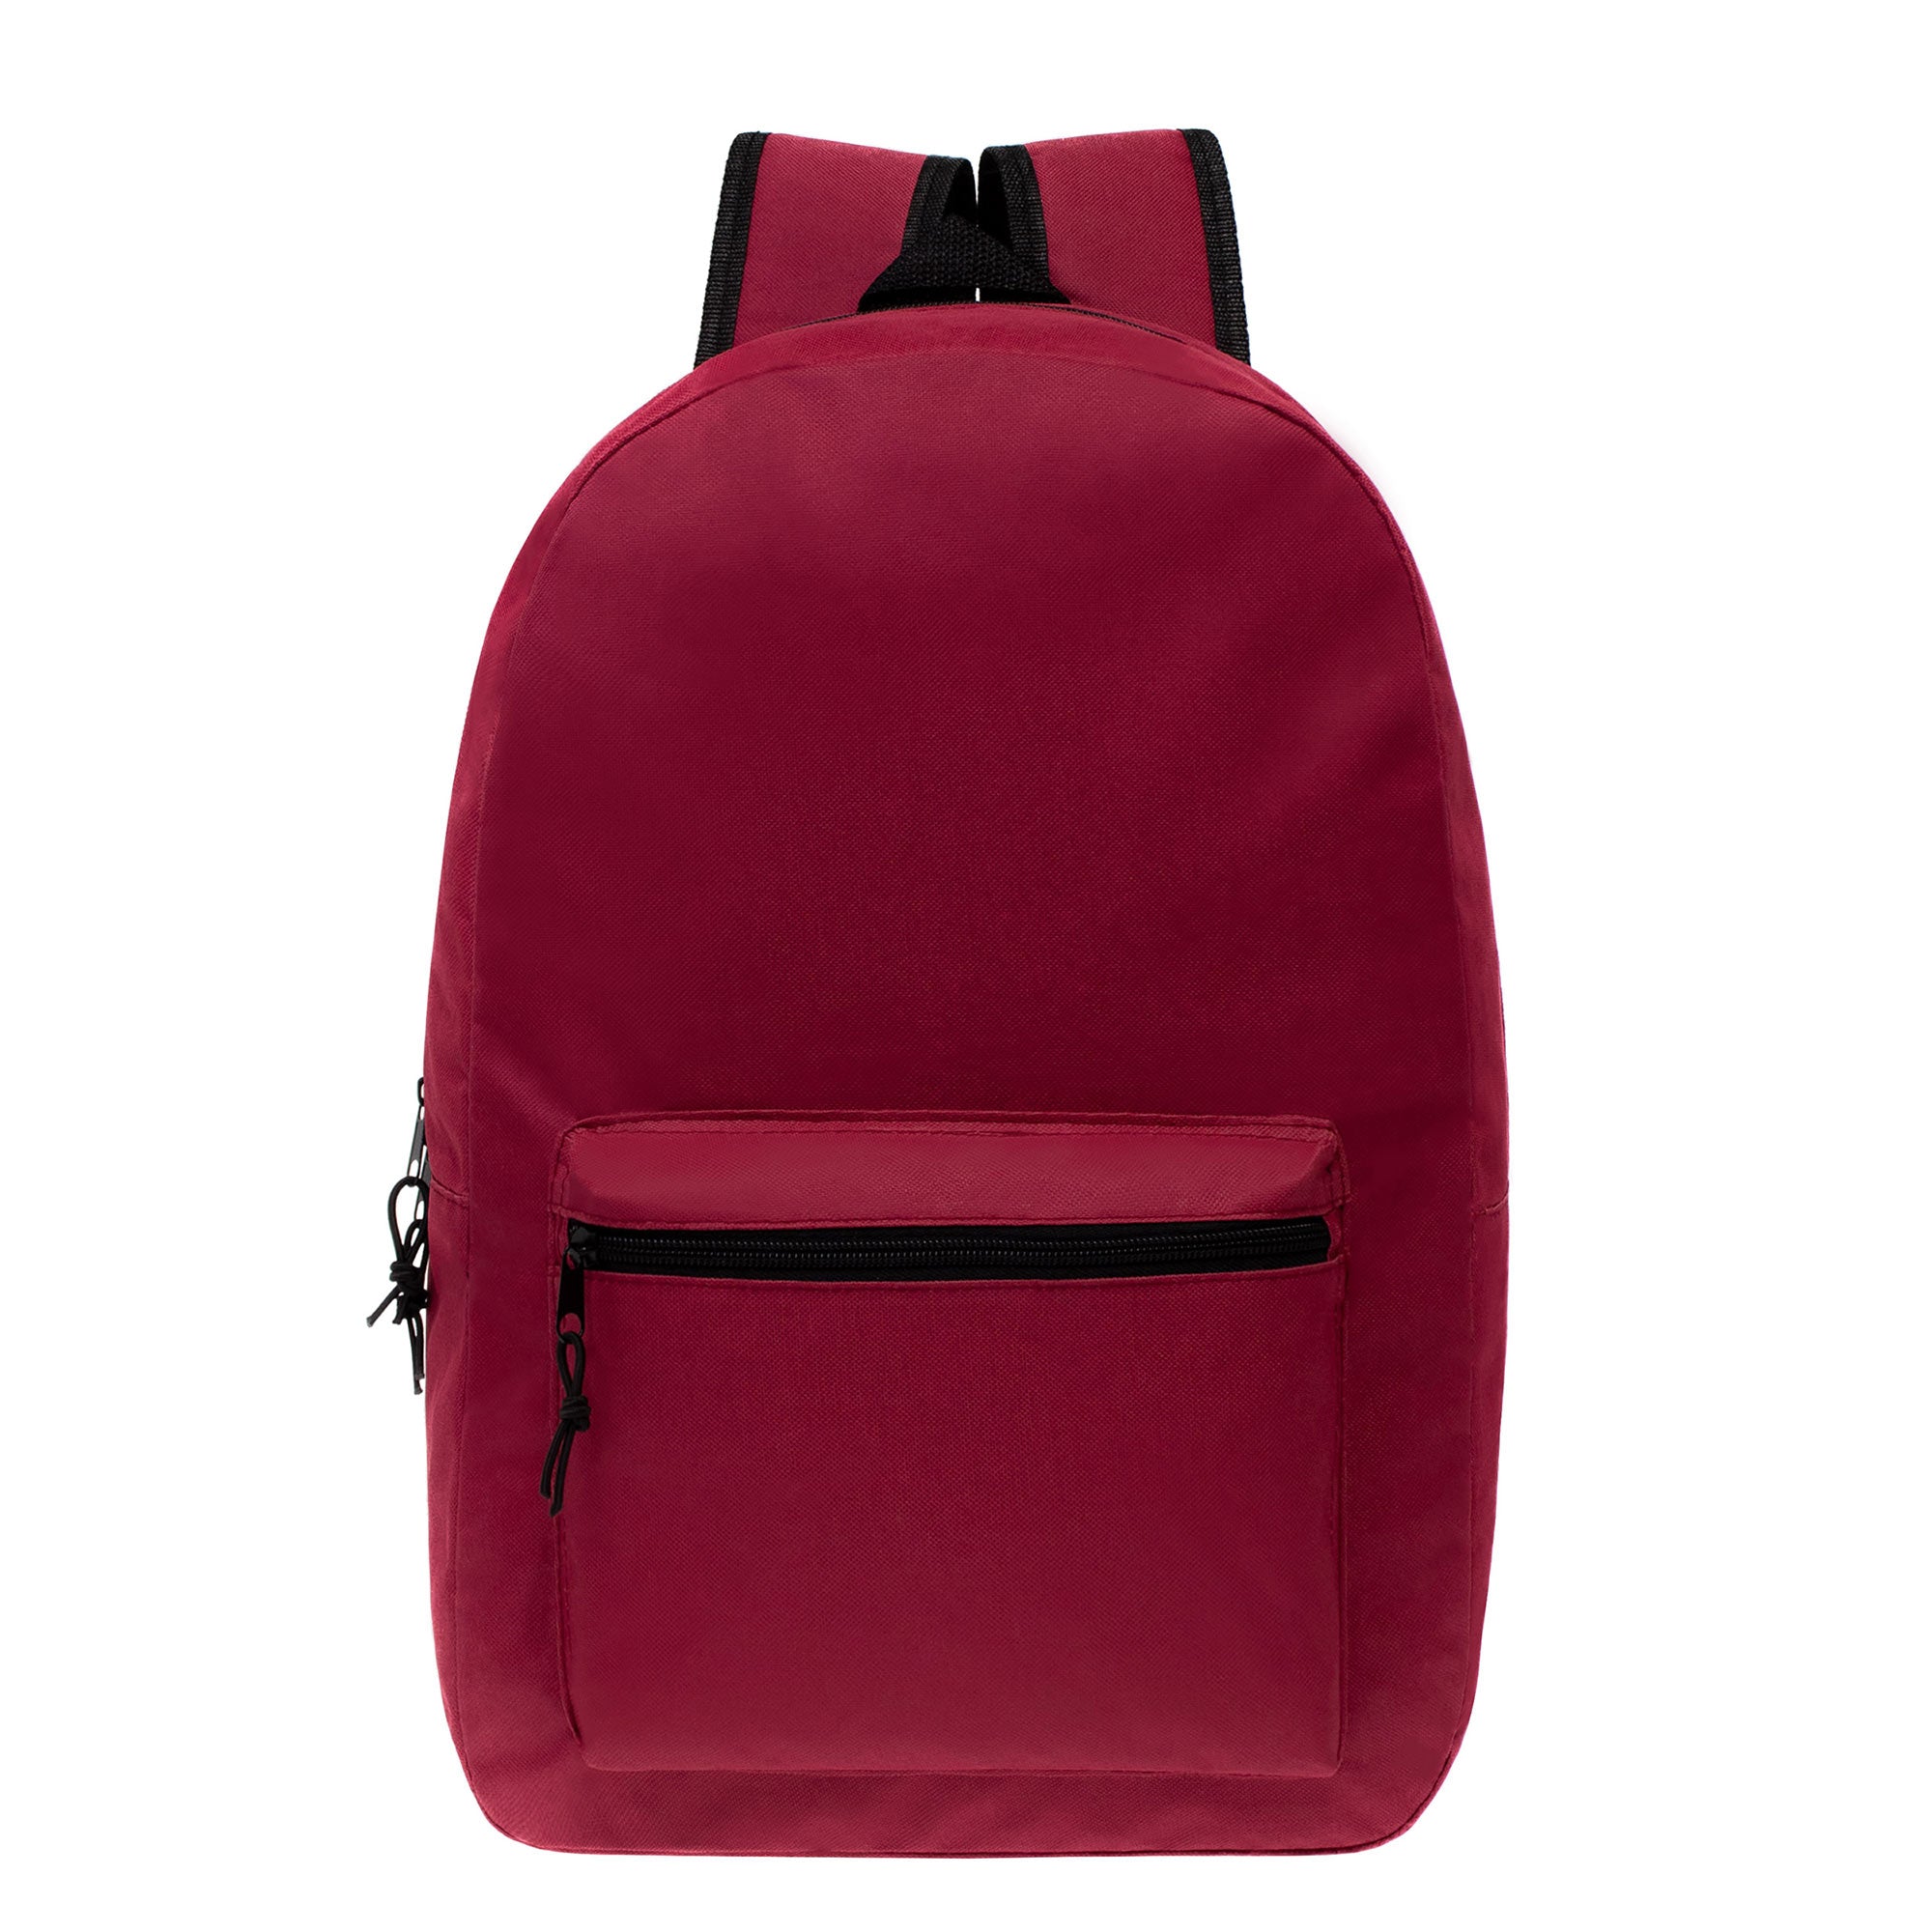 15 inch girls wholesale backpacks in bulk